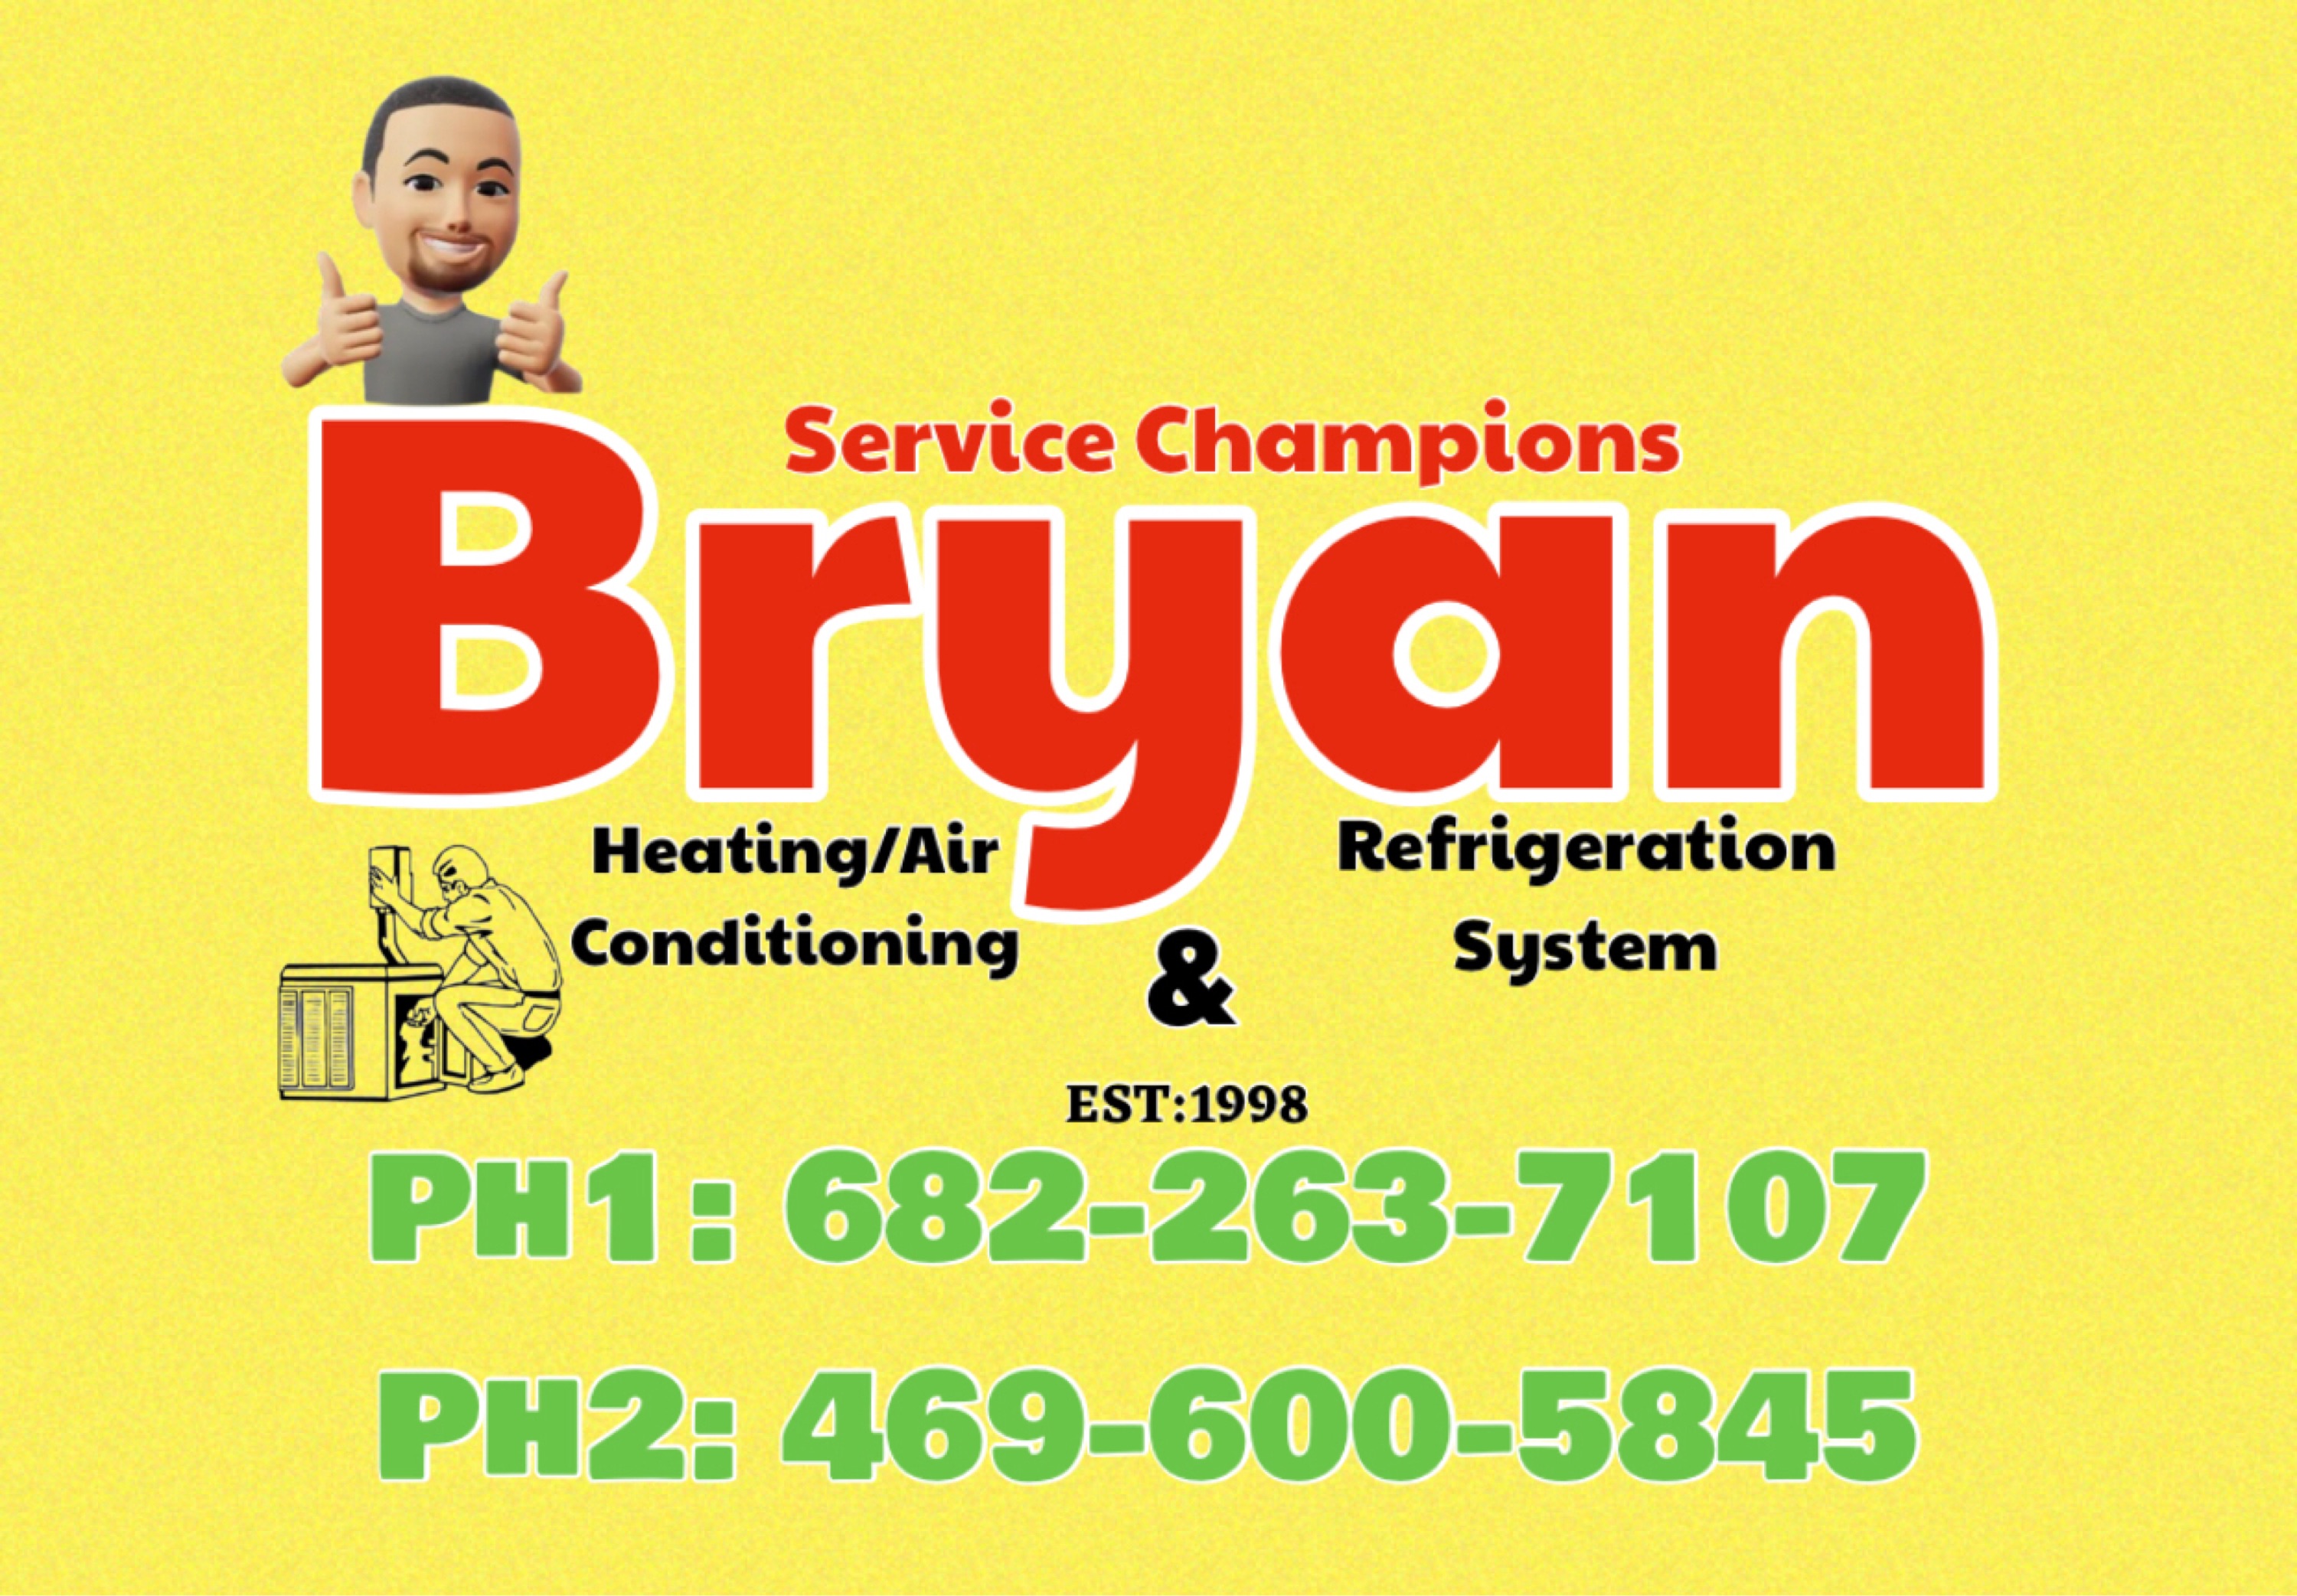 Bryan Service Champions Logo